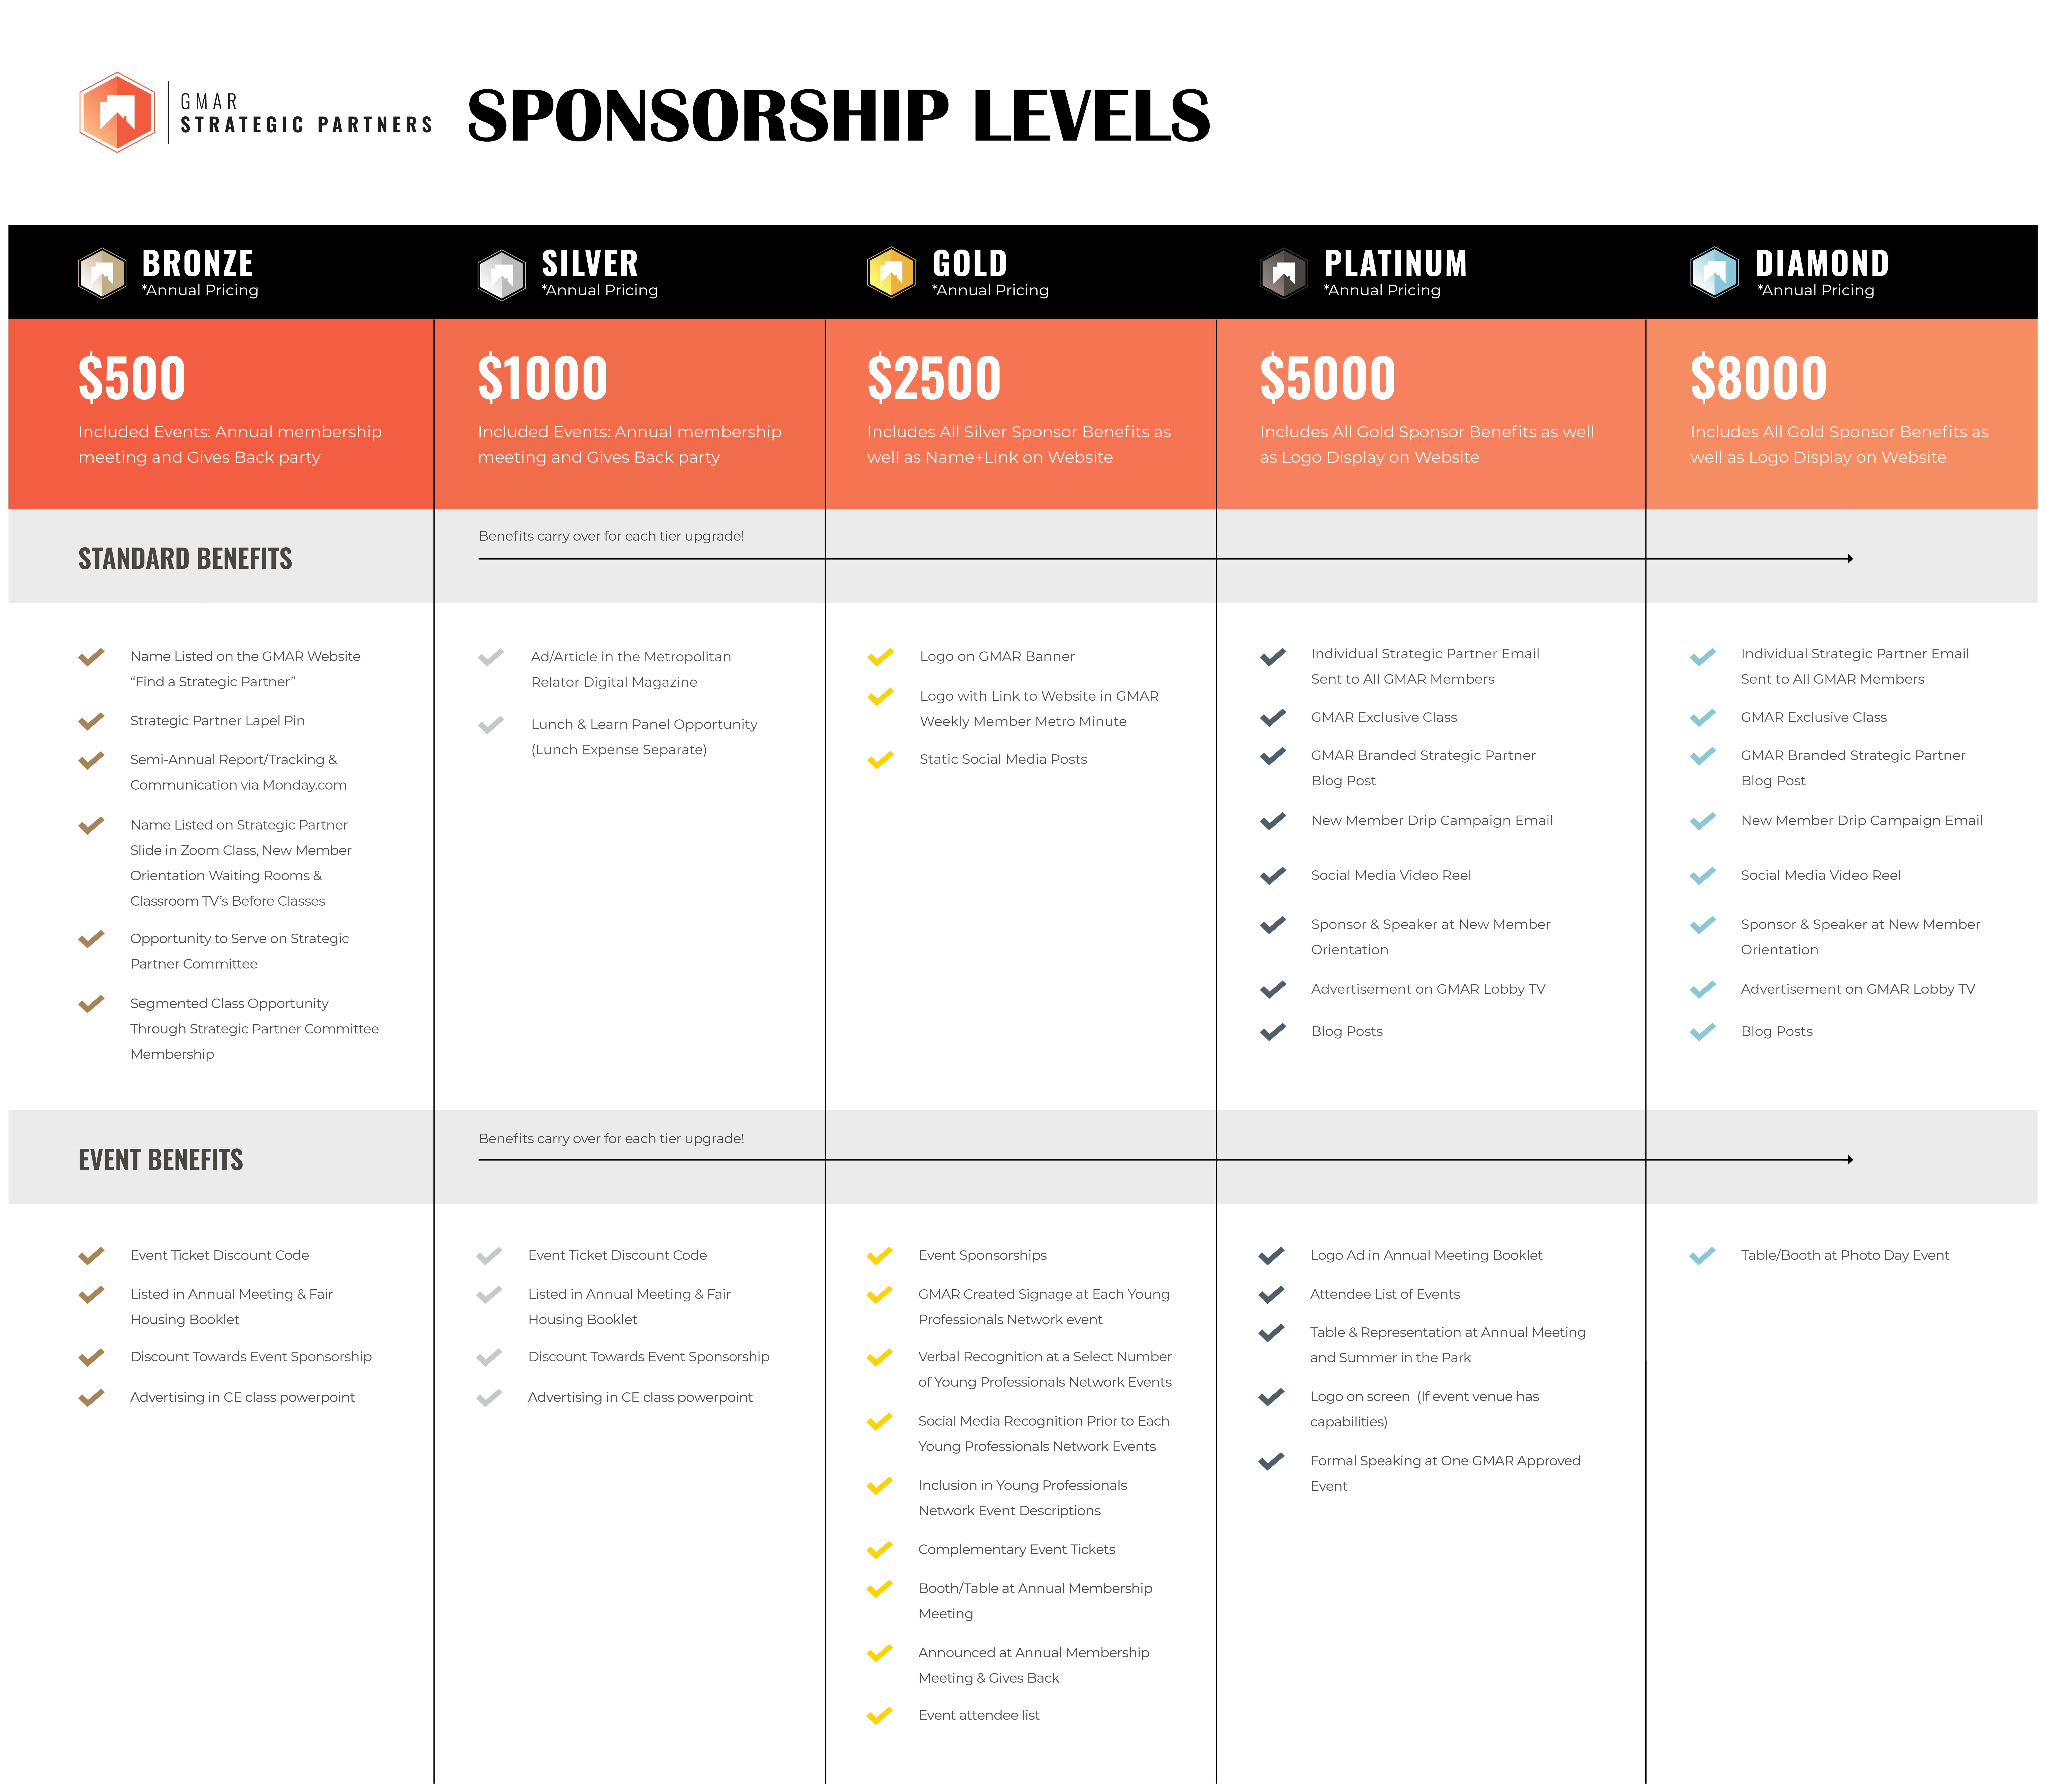 GMAR Strategic Partner Sponsorships